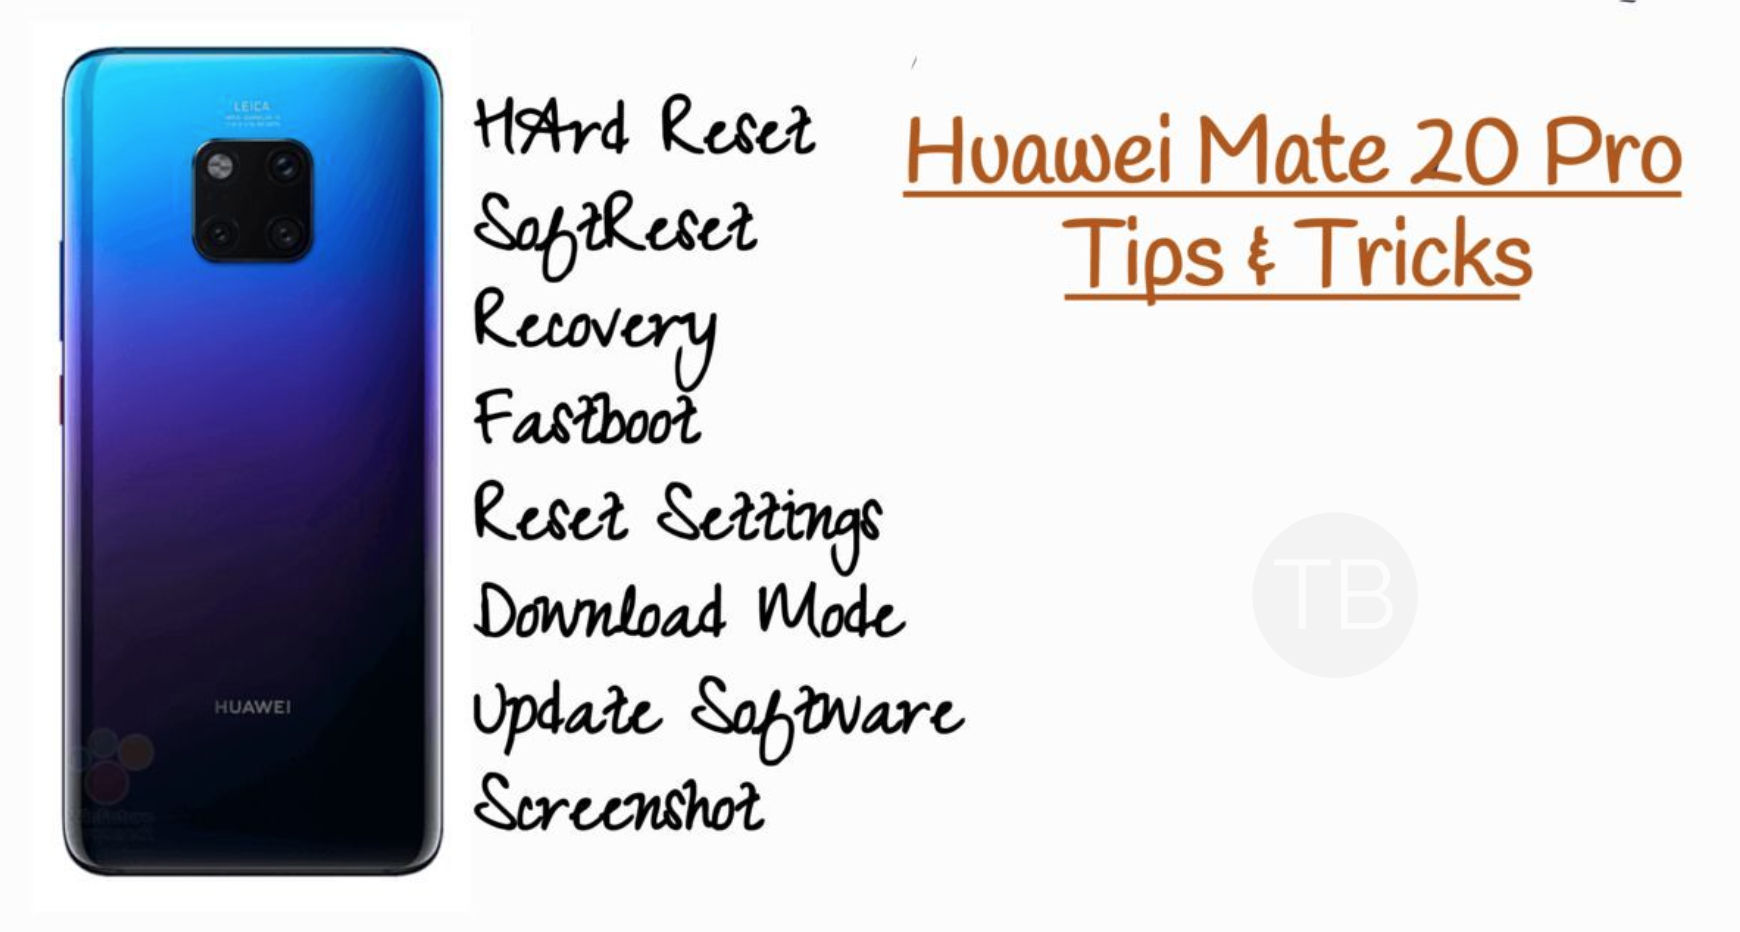 Huawei Mate 20 Pro Tips